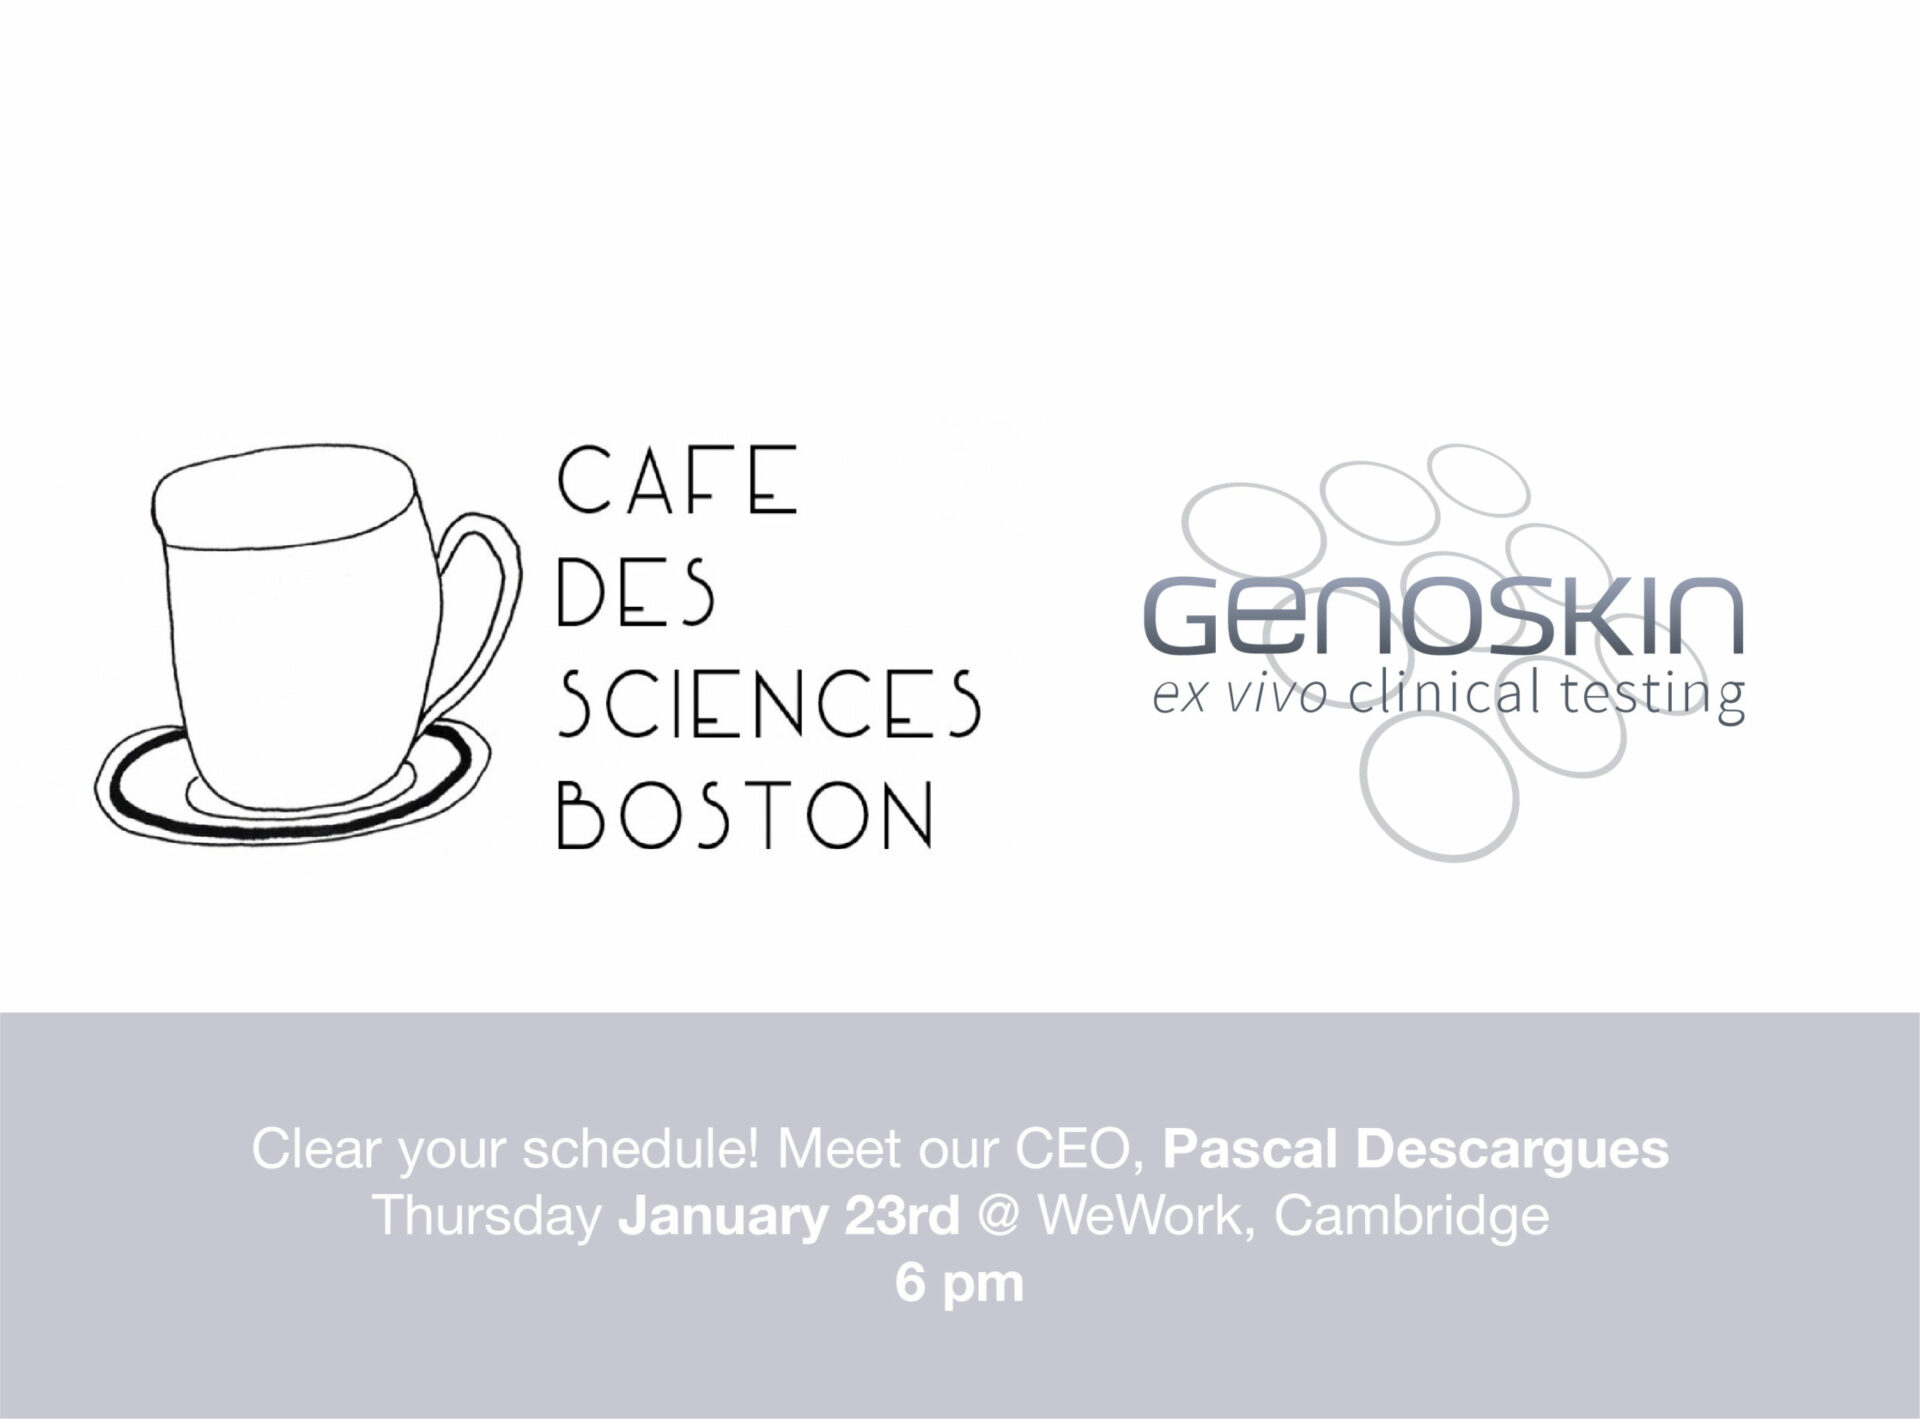 Café des Sciences Boston logo and Genoskin logo